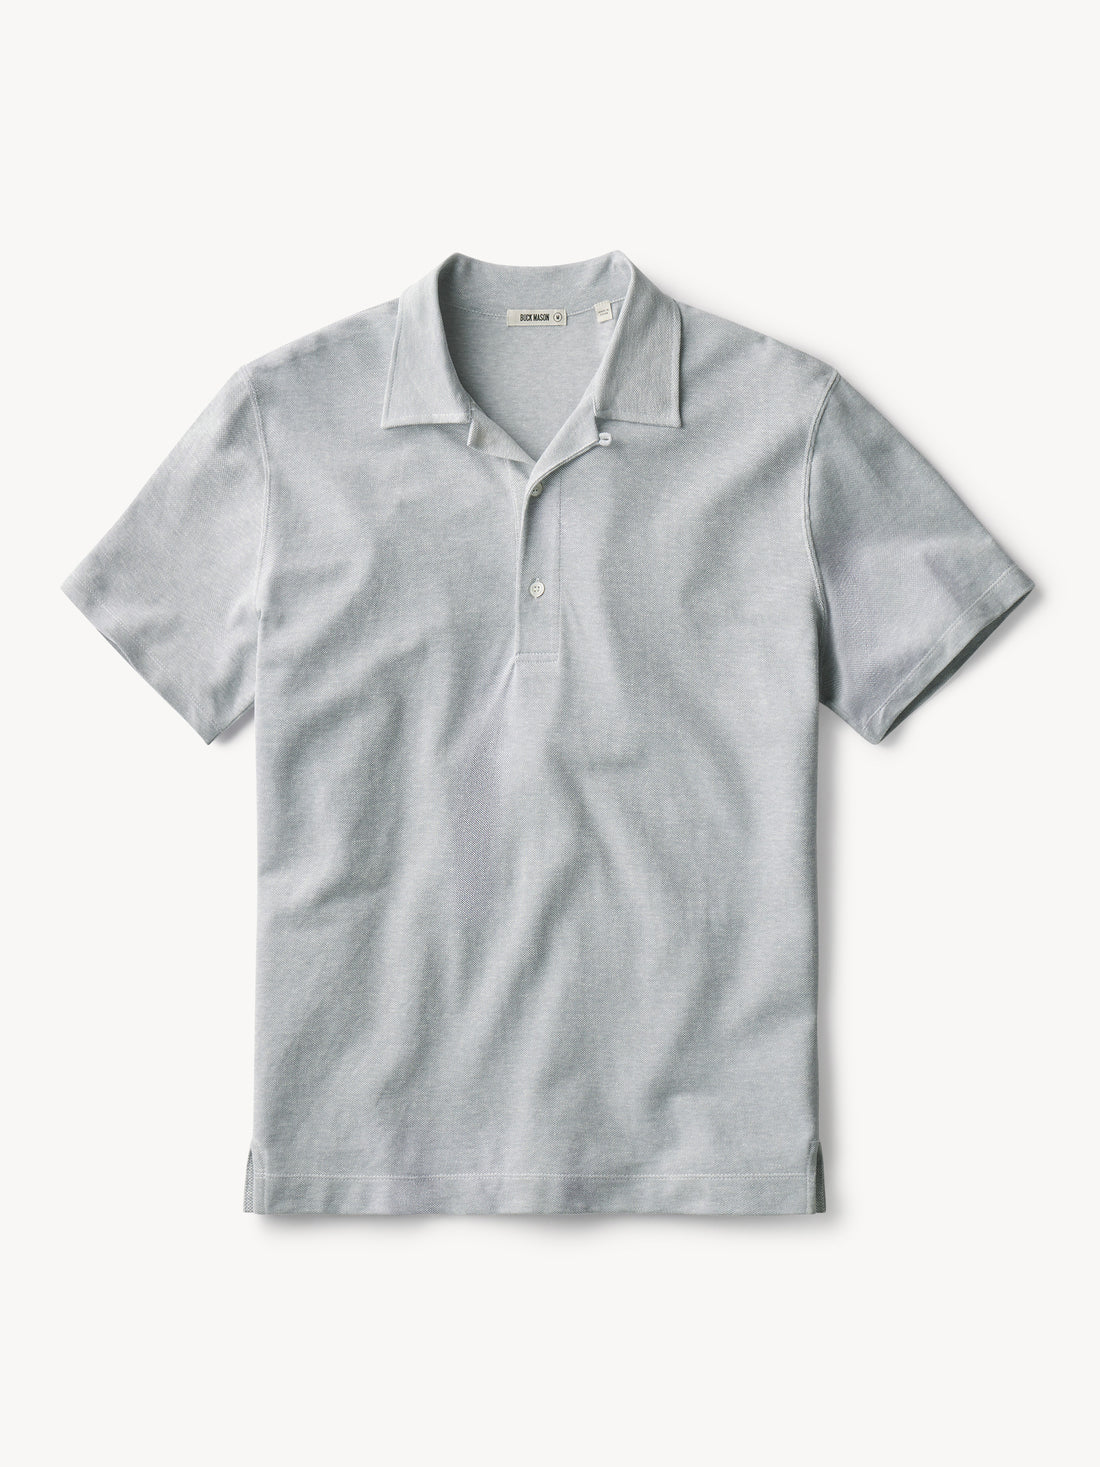 Mens Vintage Shirts – Casual, Dress, T-shirts, Polos LINEN PIQUE POLO Buck Mason   AT vintagedancer.com